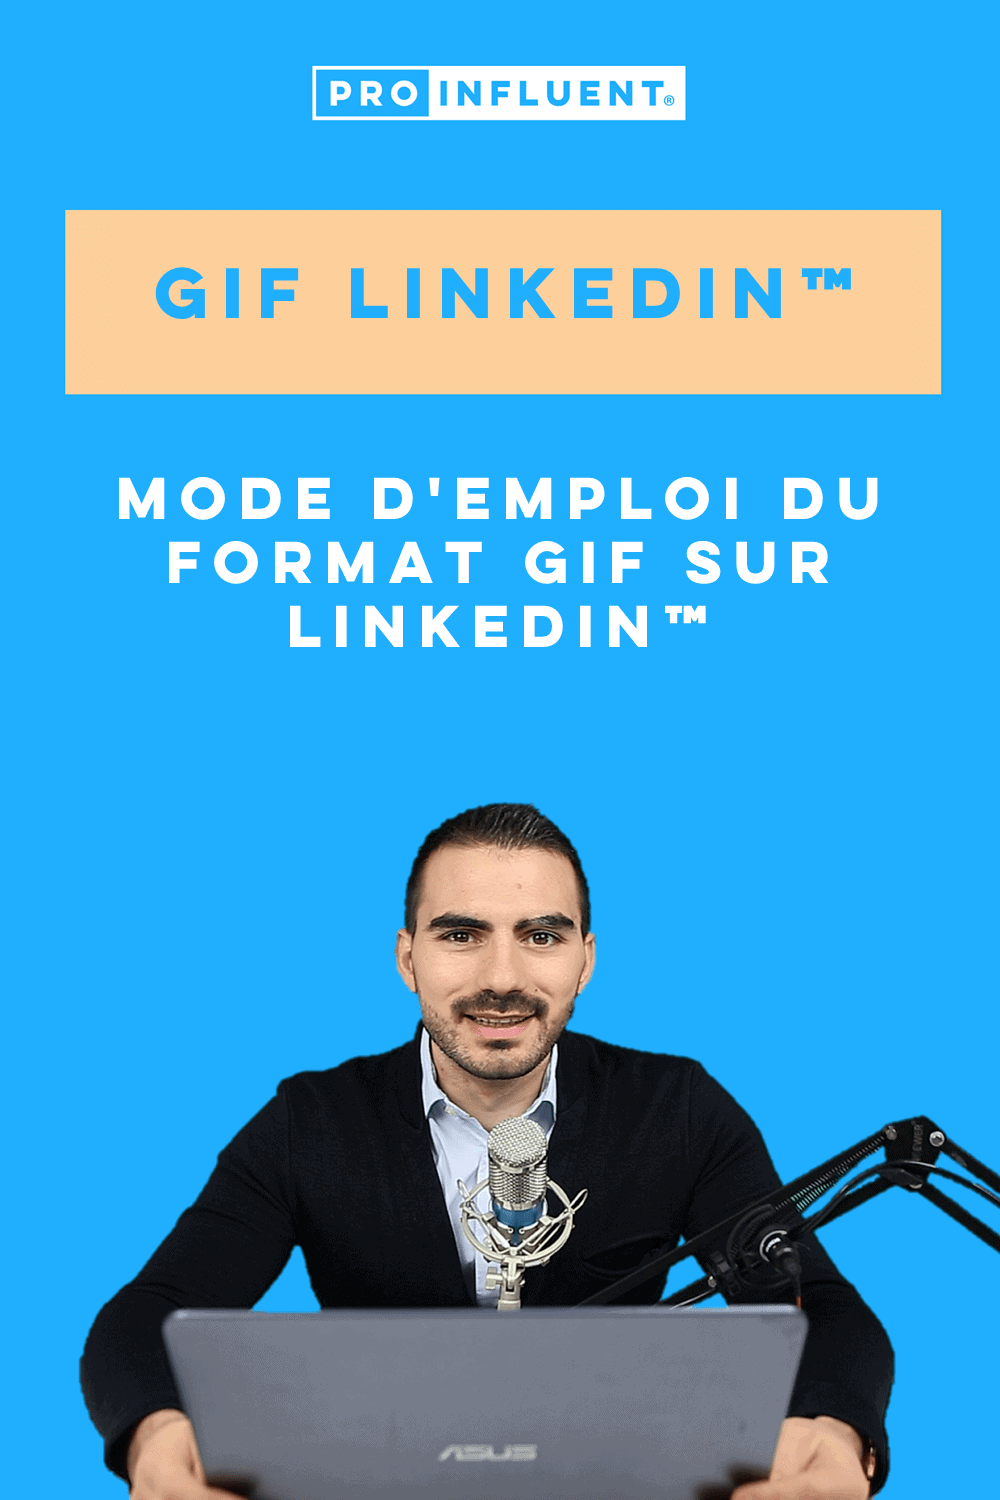 Gif LinkedIn™: how to use the GIF format on LinkedIn™